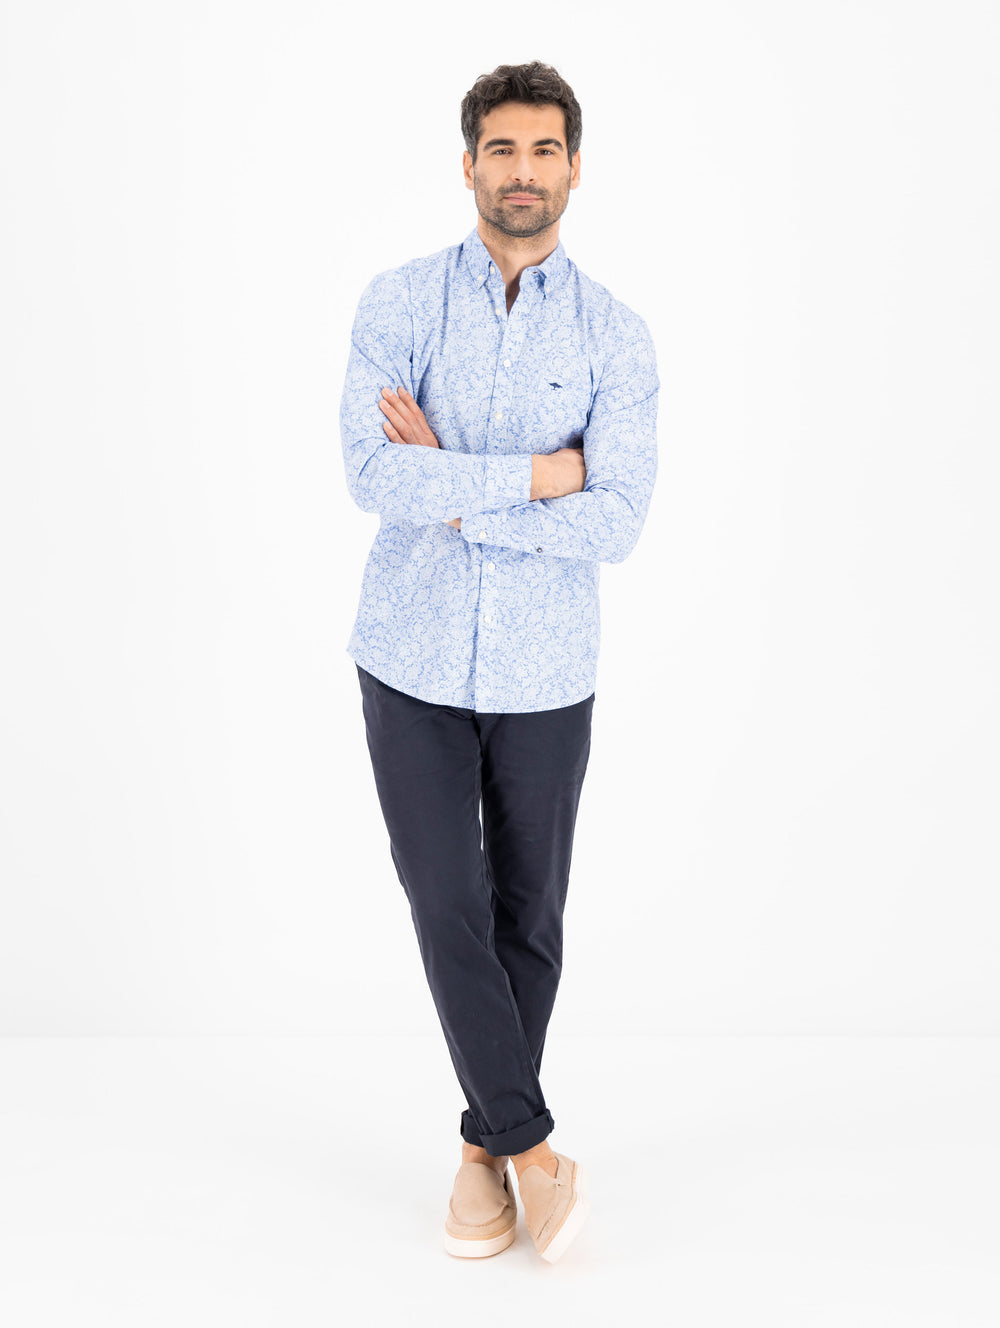 Men's shirts | Fynch-Hatton official online shop – FYNCH-HATTON |  Offizieller Online Shop